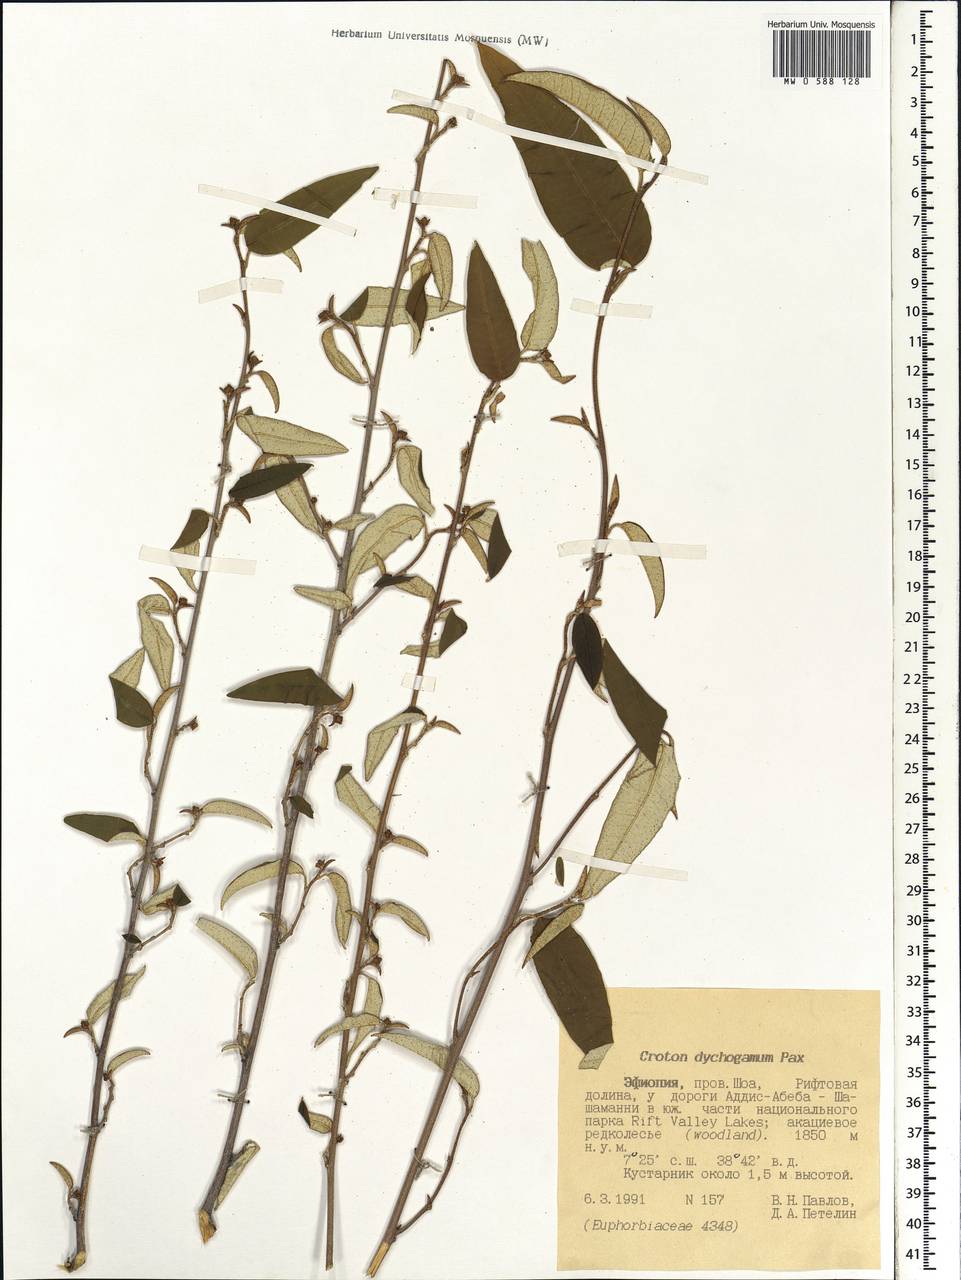 Croton dichogamus Pax, Африка (AFR) (Эфиопия)